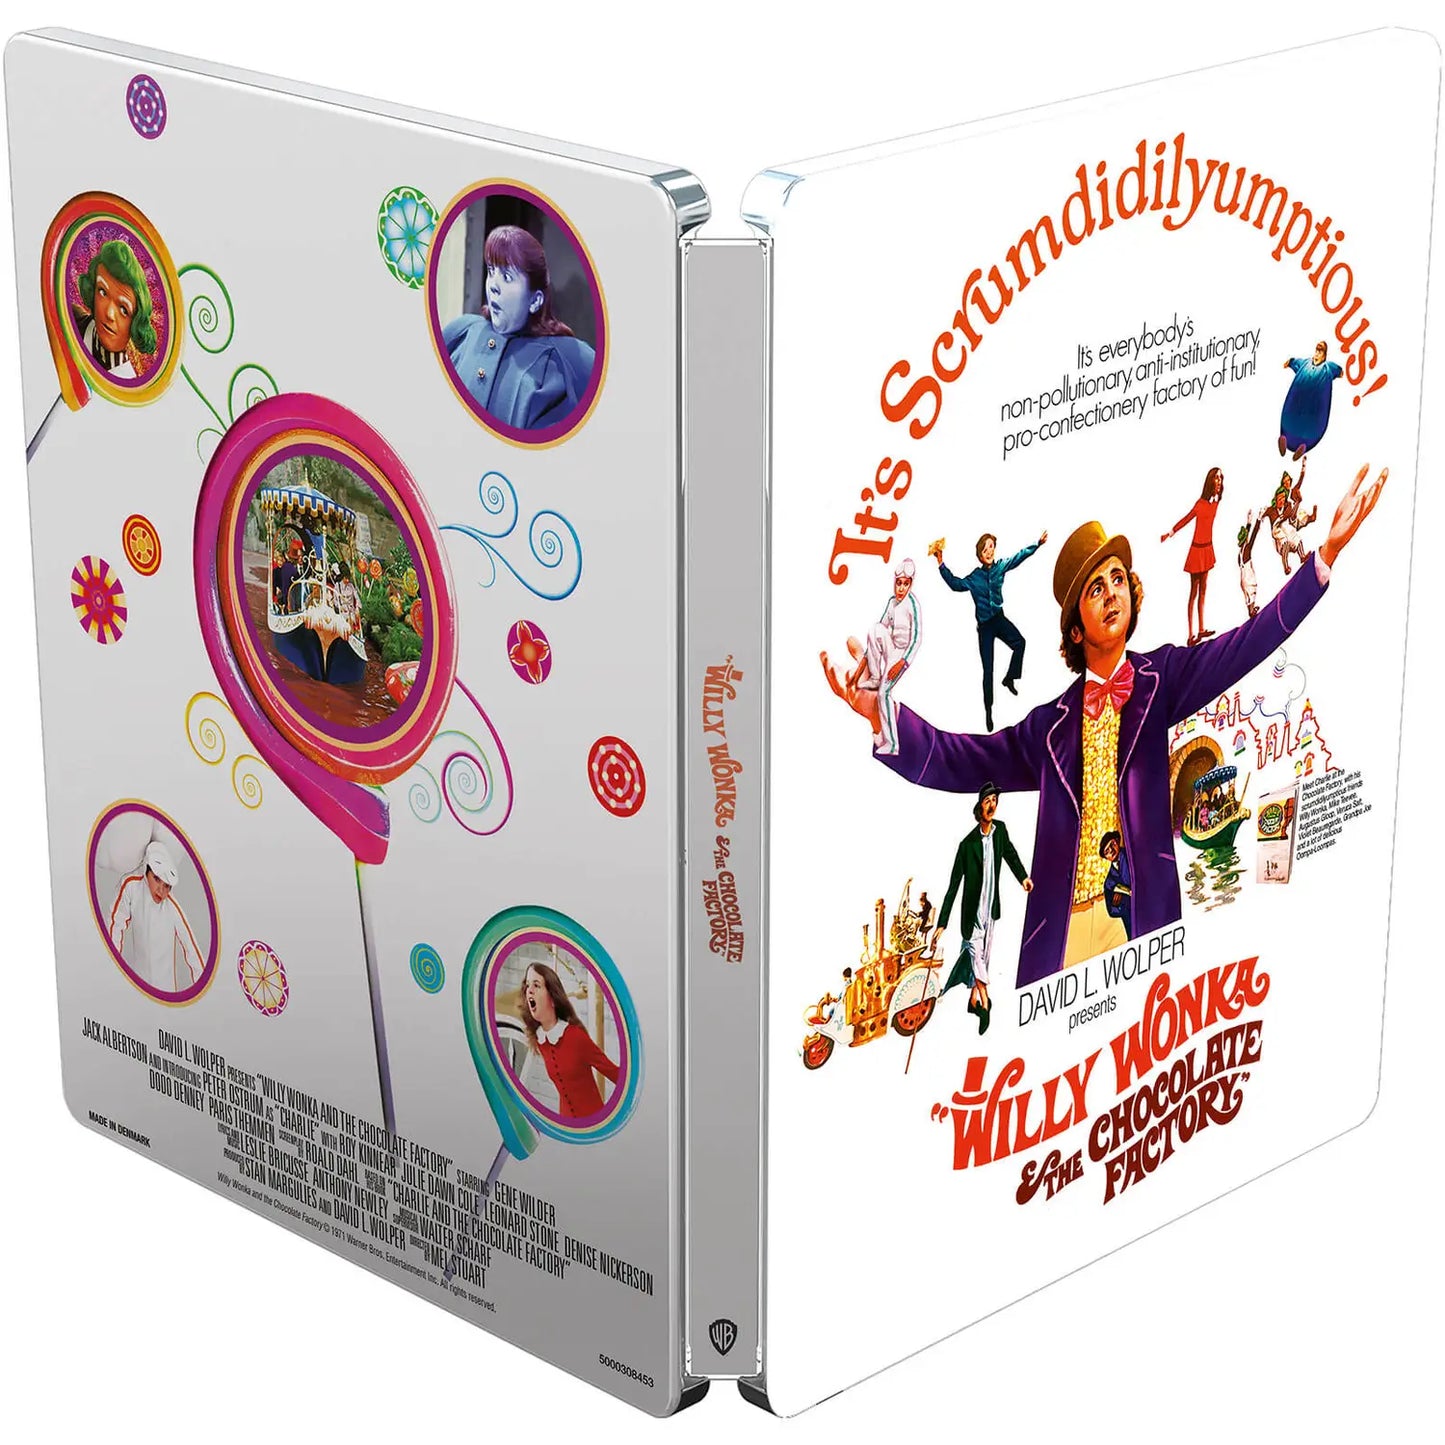 Willy Wonka & The Chocolate Factory 4K UHD + BD SteelBook /Region Free/B)